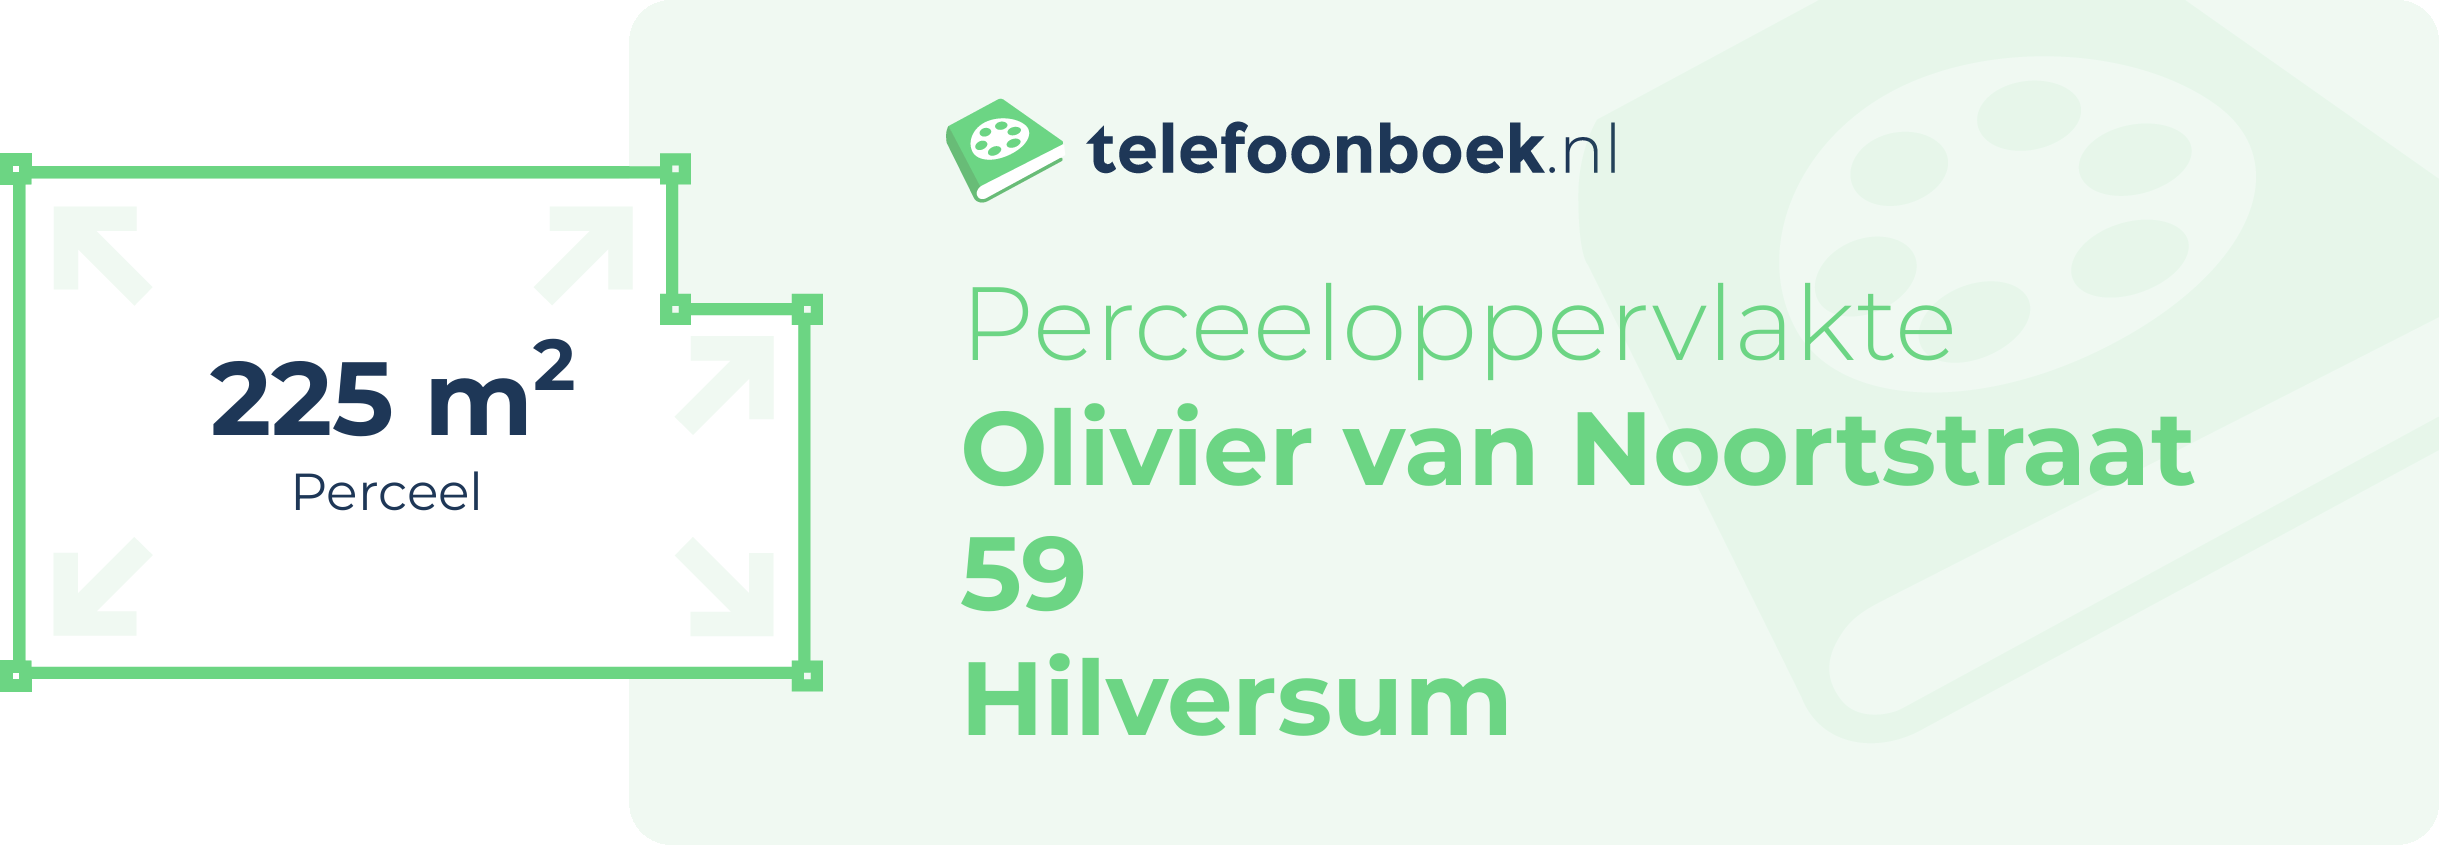 Perceeloppervlakte Olivier Van Noortstraat 59 Hilversum